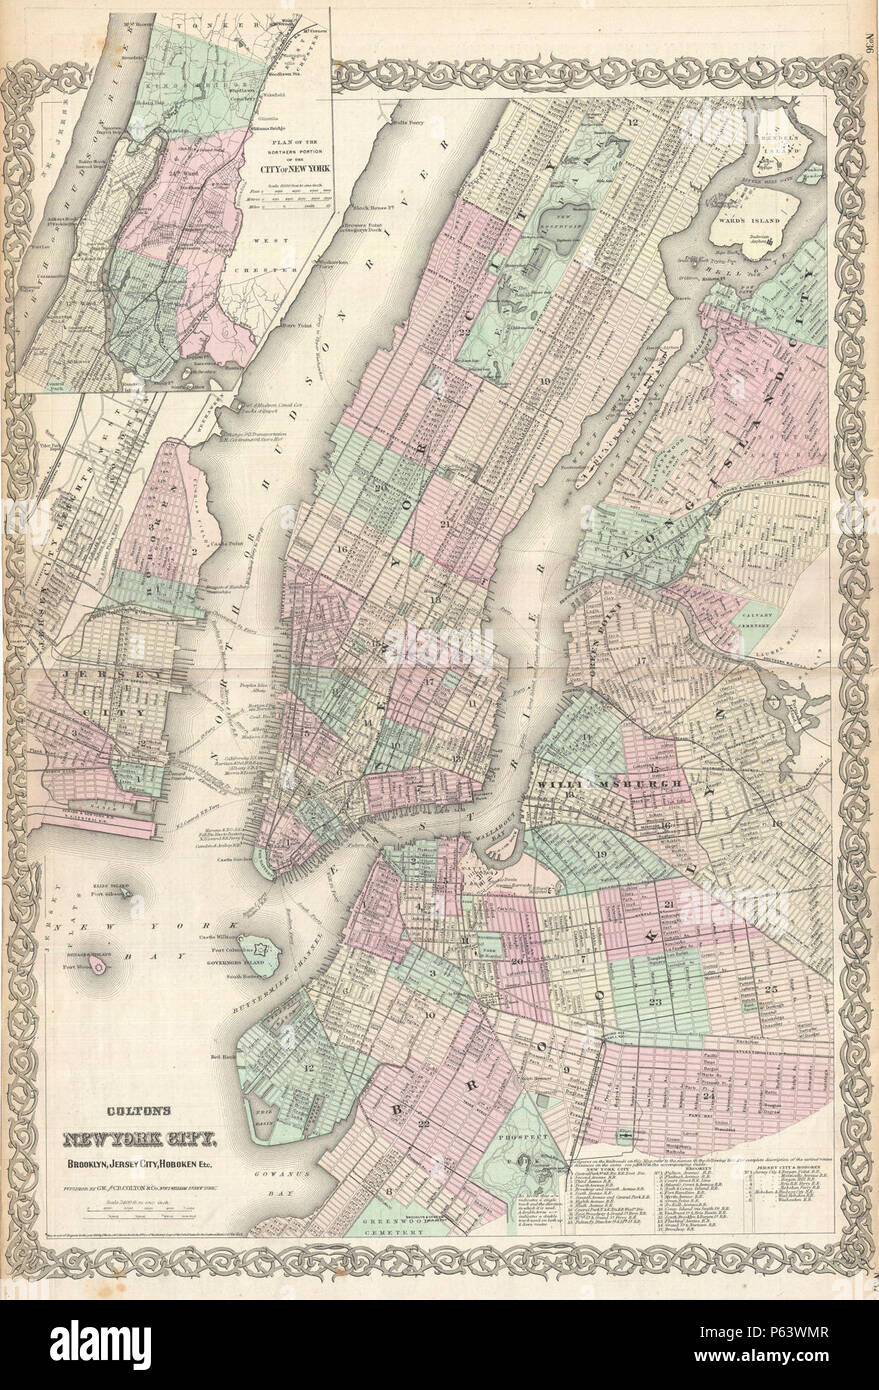 1865 Colton mappa di New York City di Manhattan e Brooklyn, Long Island City) - Geographicus - NewYorkCity-colton-1866. Foto Stock